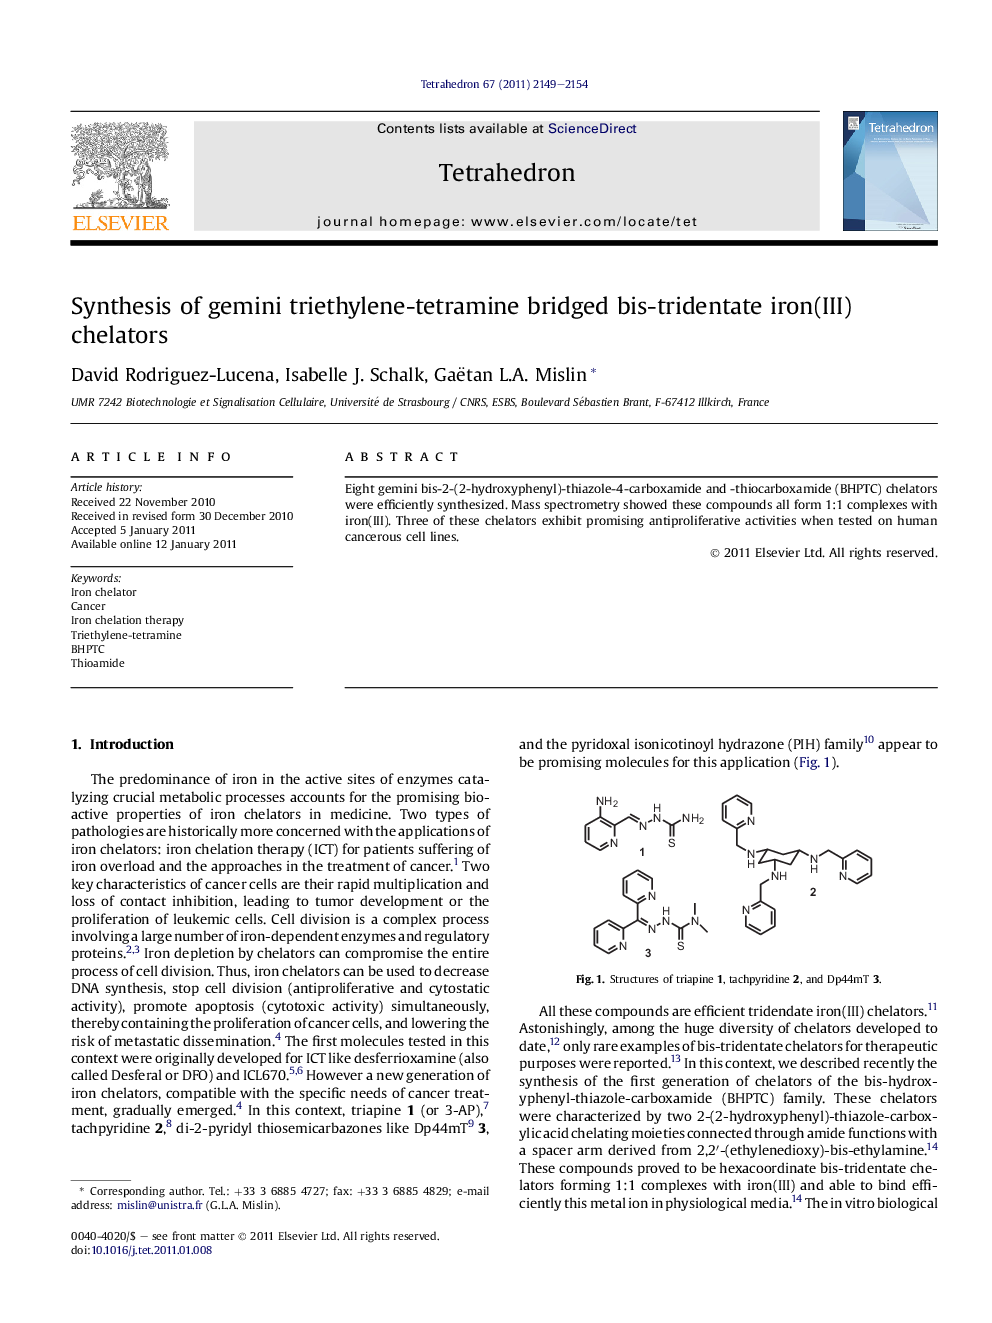 Synthesis of gemini triethylene-tetramine bridged bis-tridentate iron(III) chelators